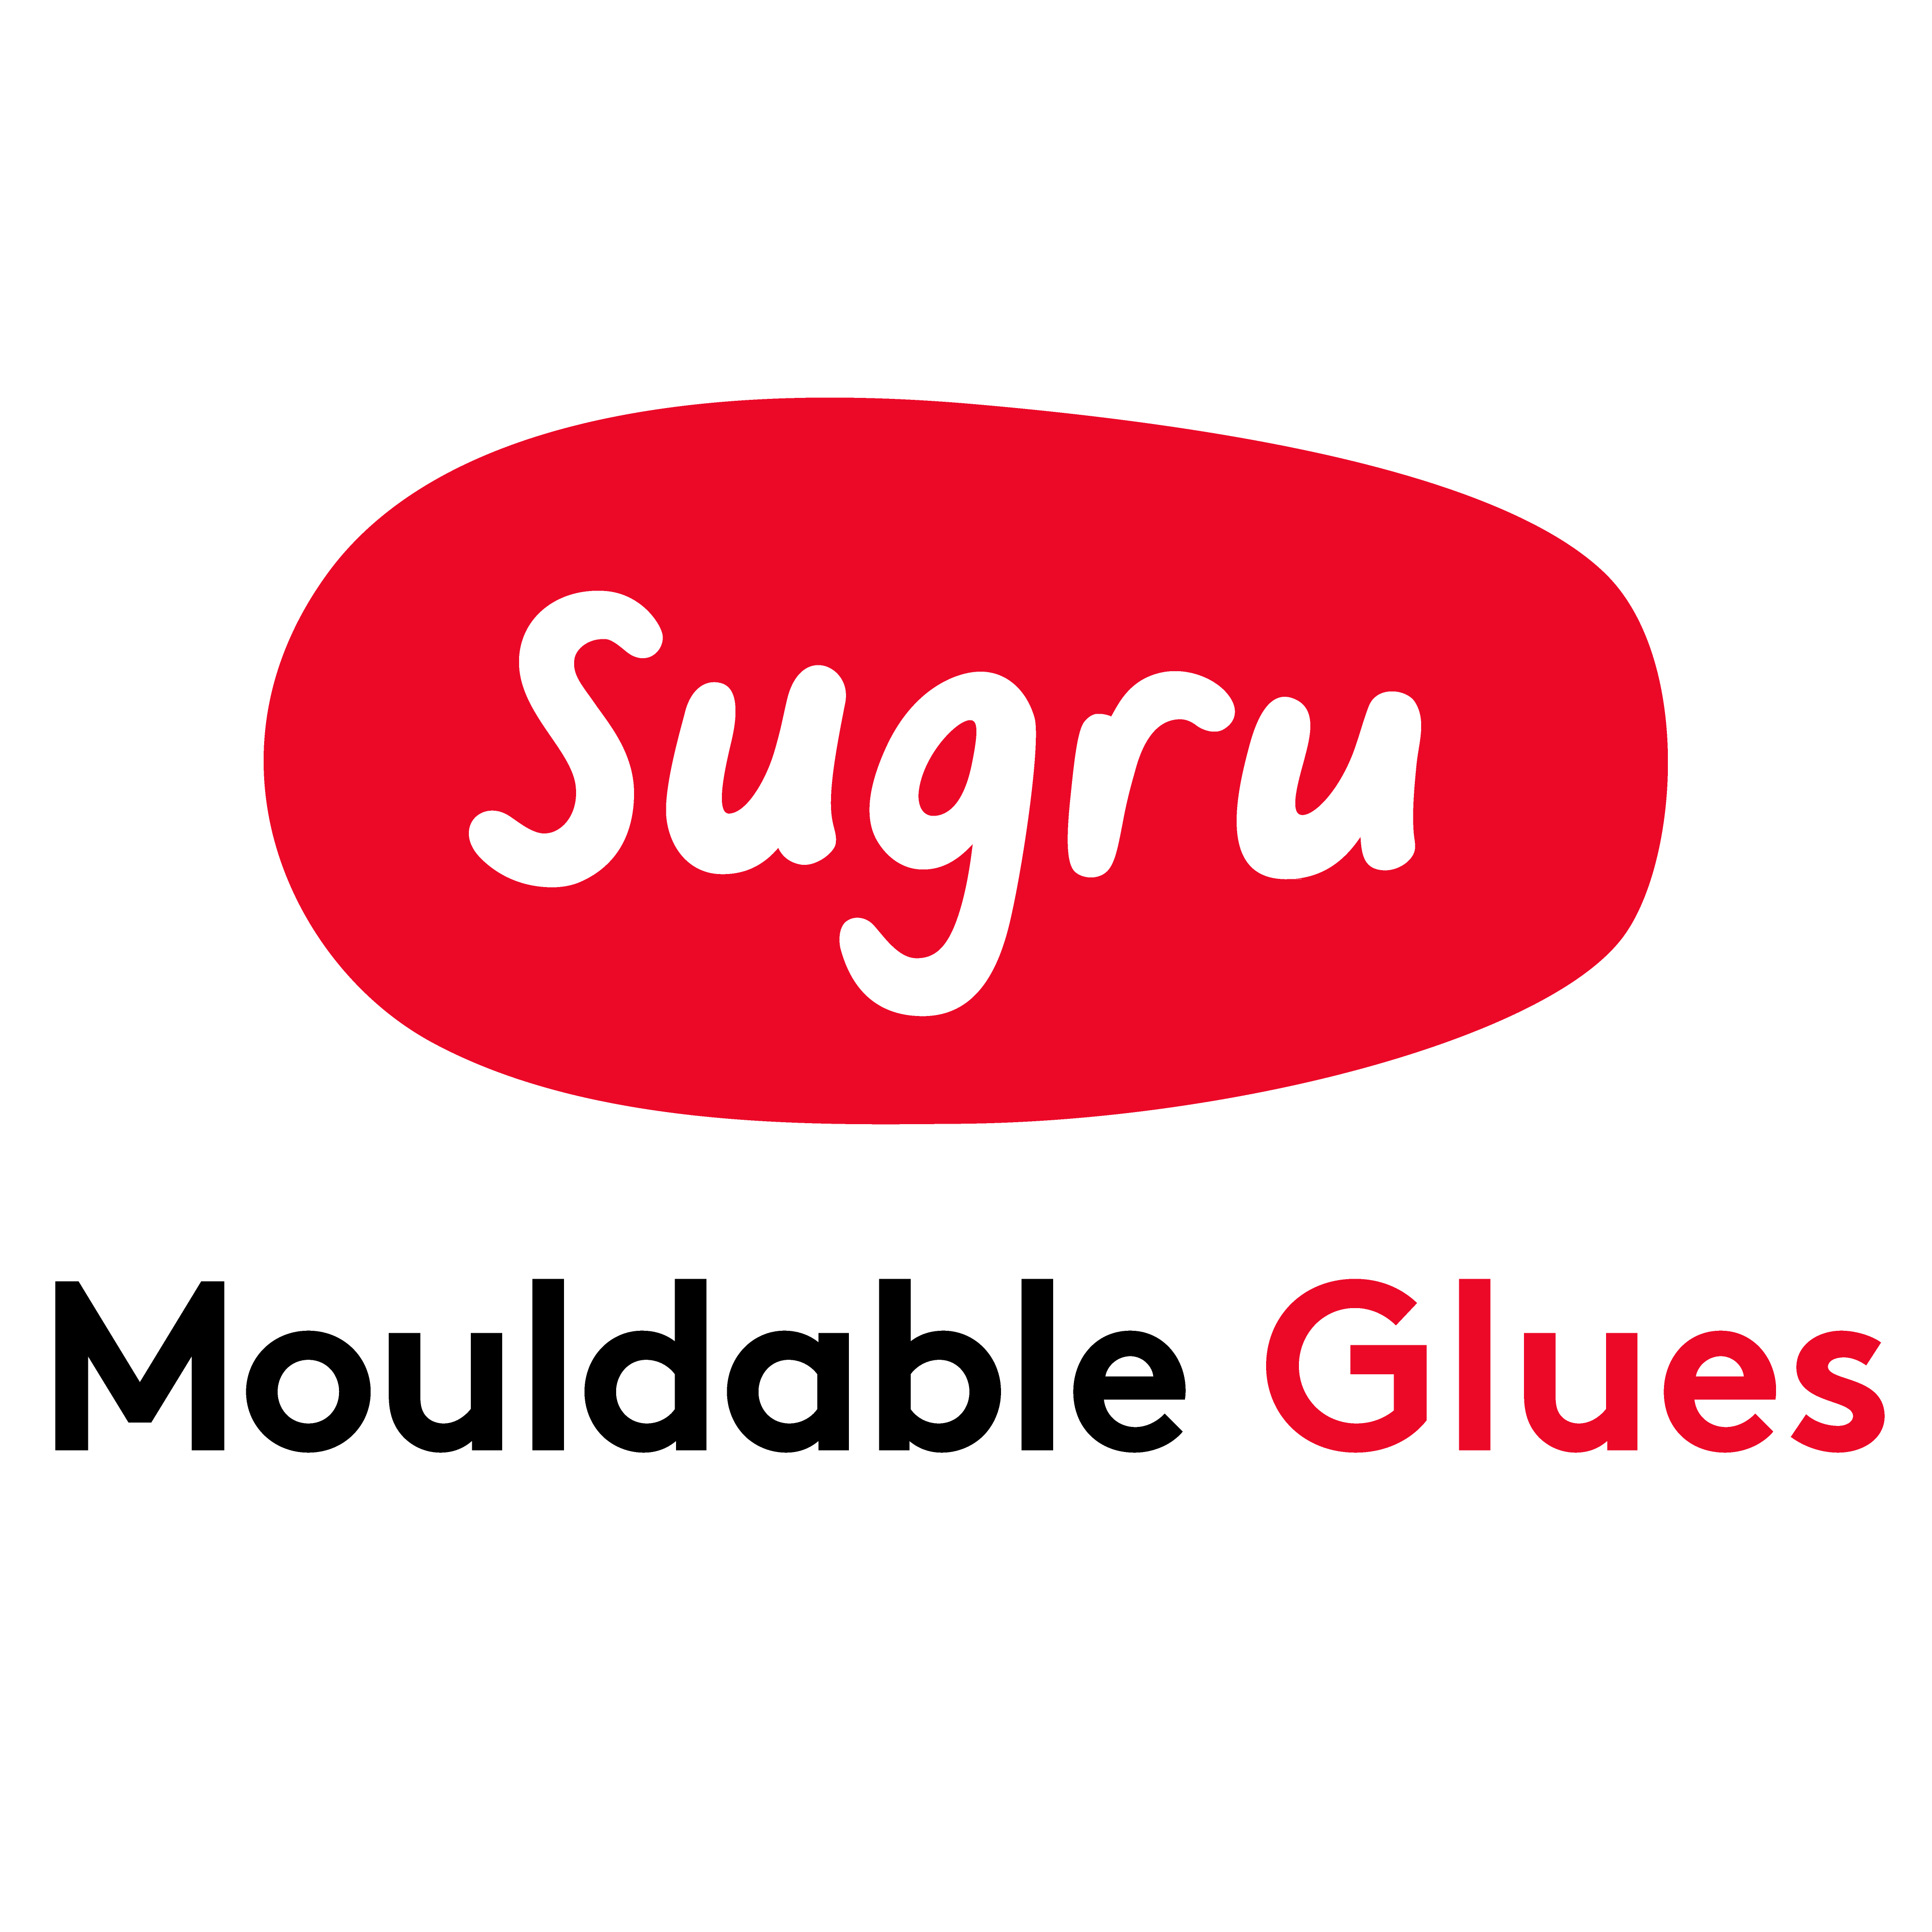 Sugru logo